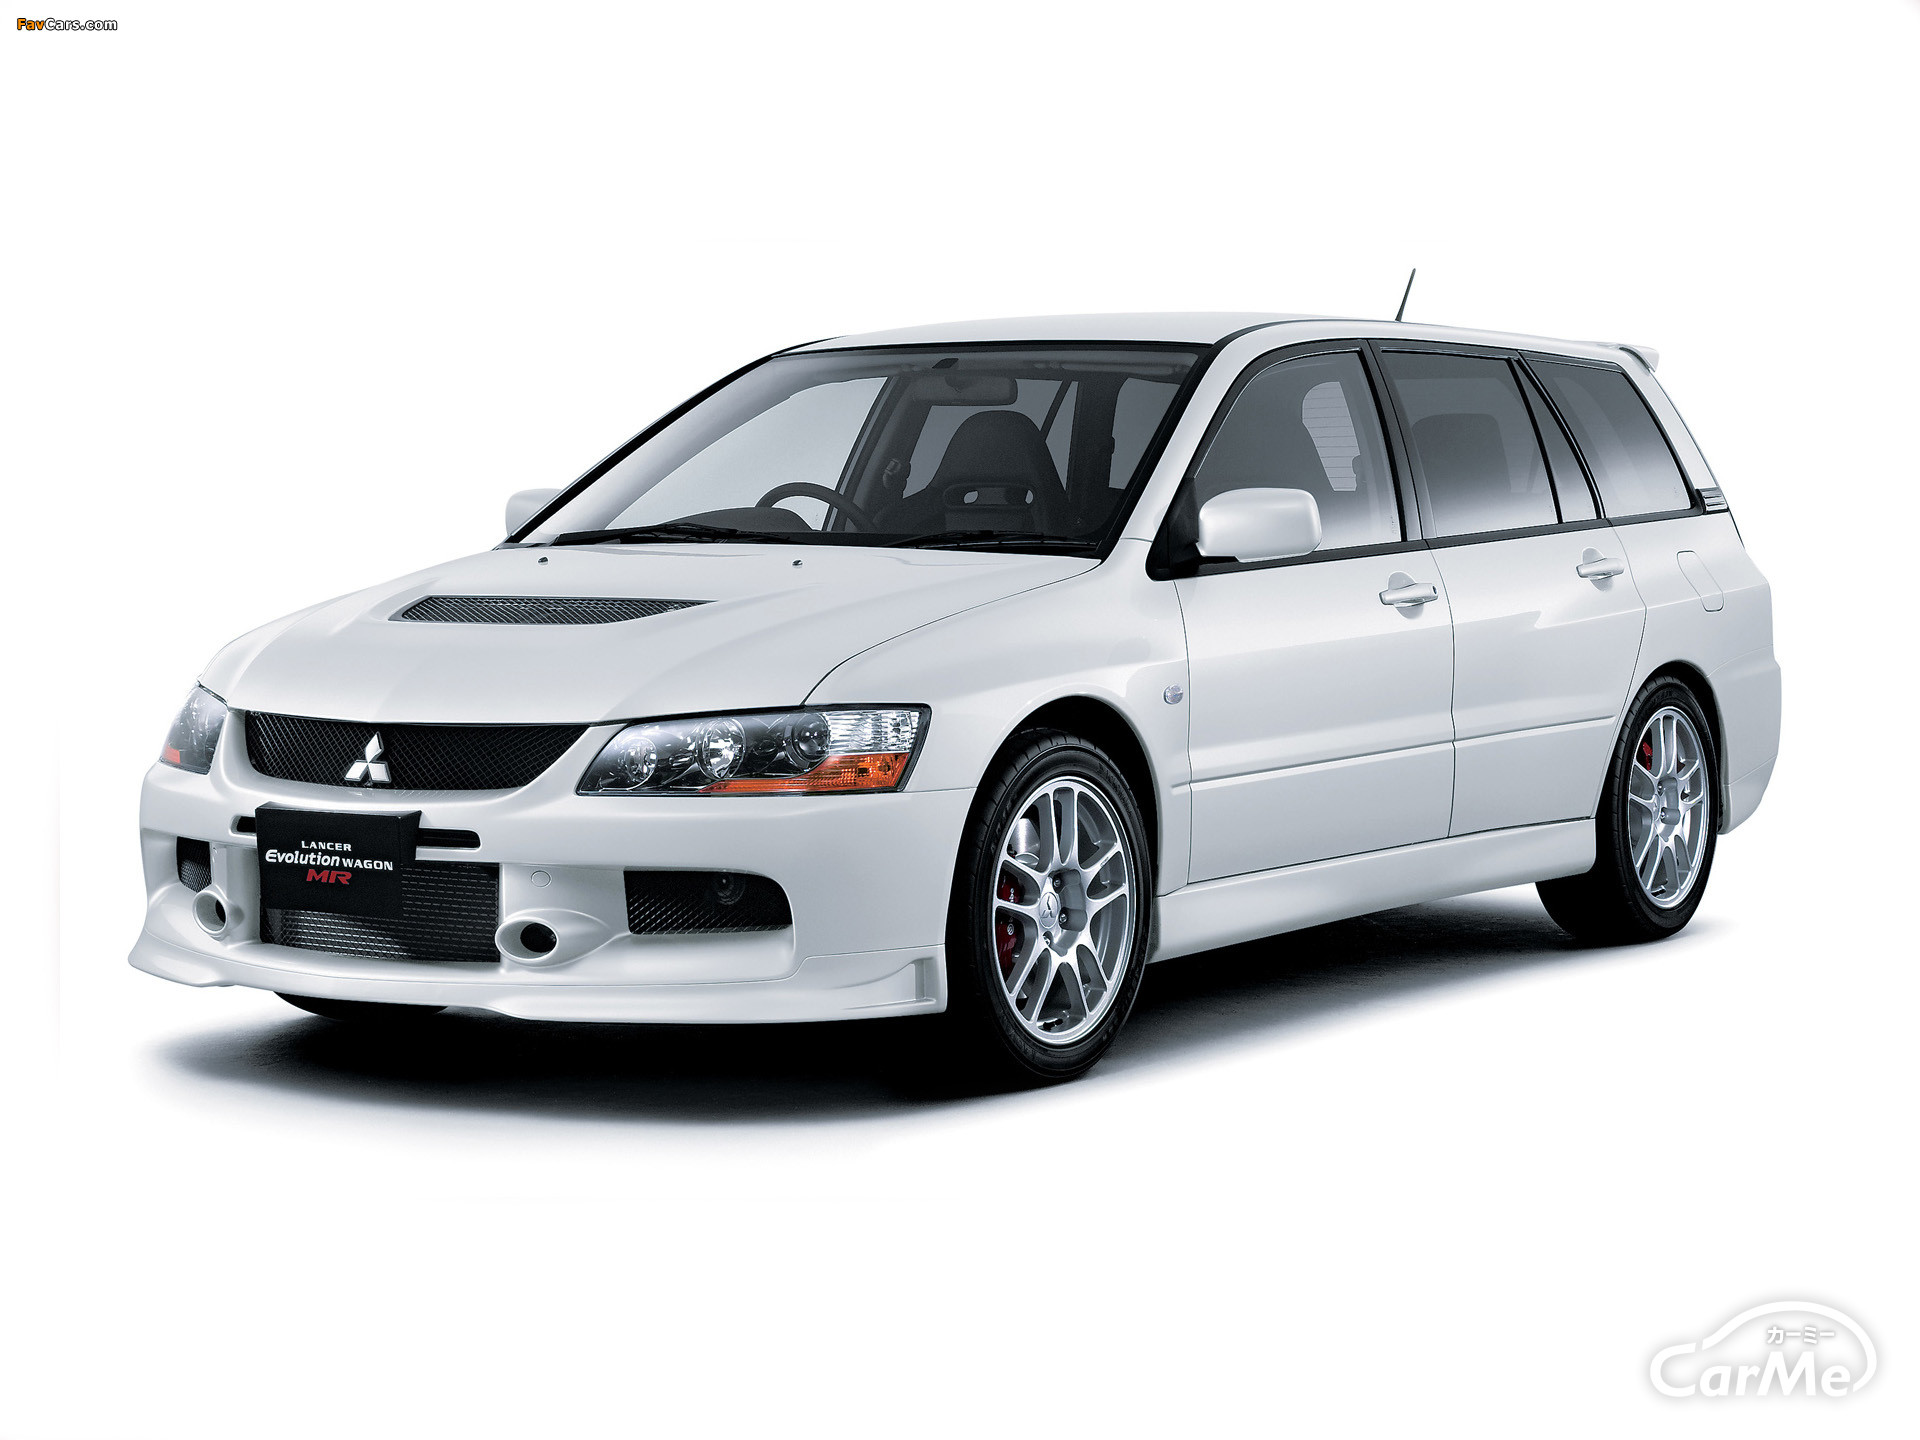 2005 Mitsubishi Lancer Evolution IX Wagon